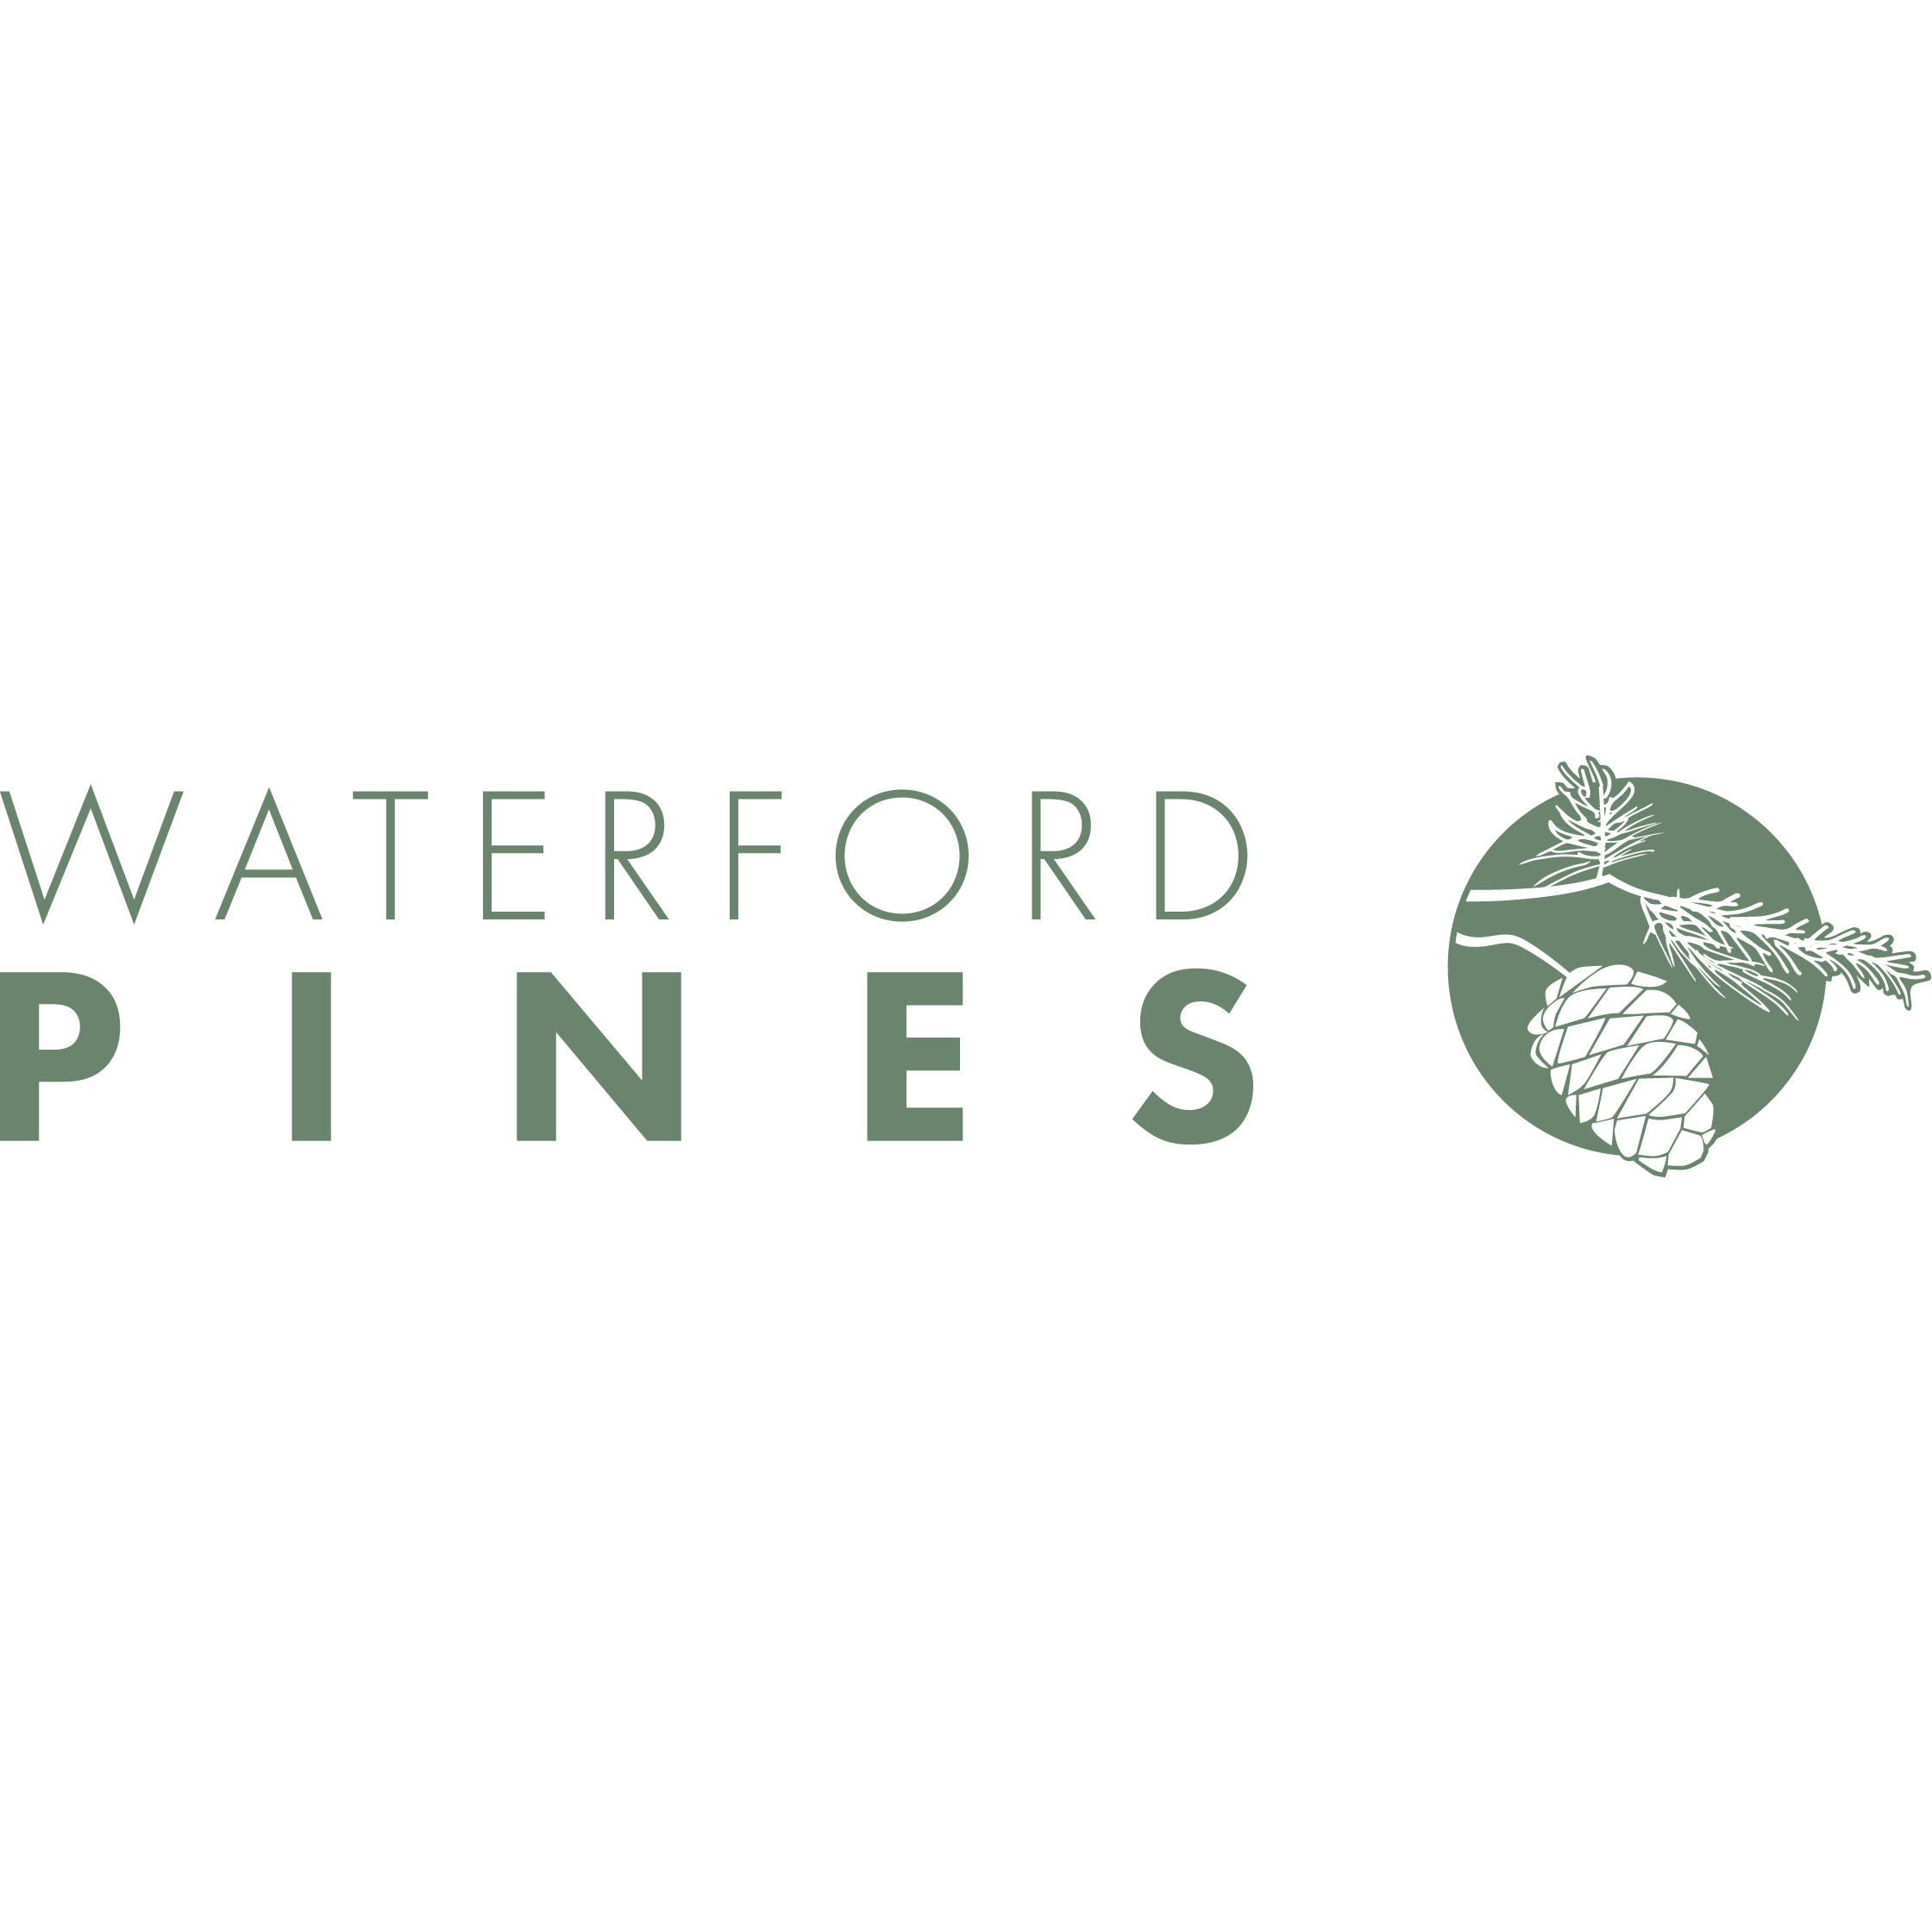 Waterford Pines